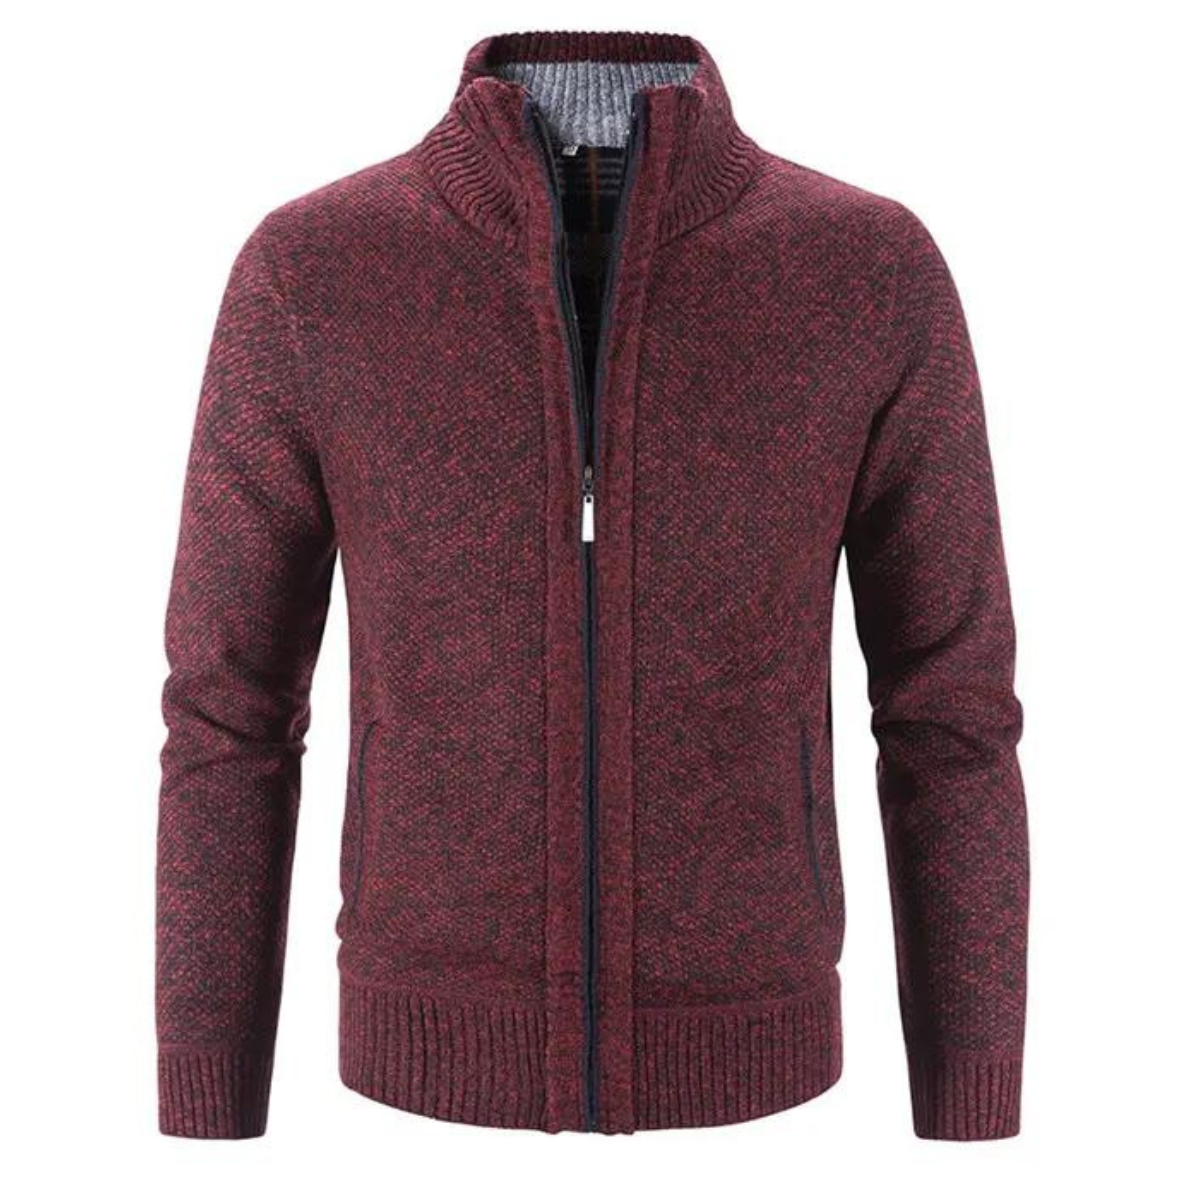 Hayden | High Neck Cardigan Sweater Jacket